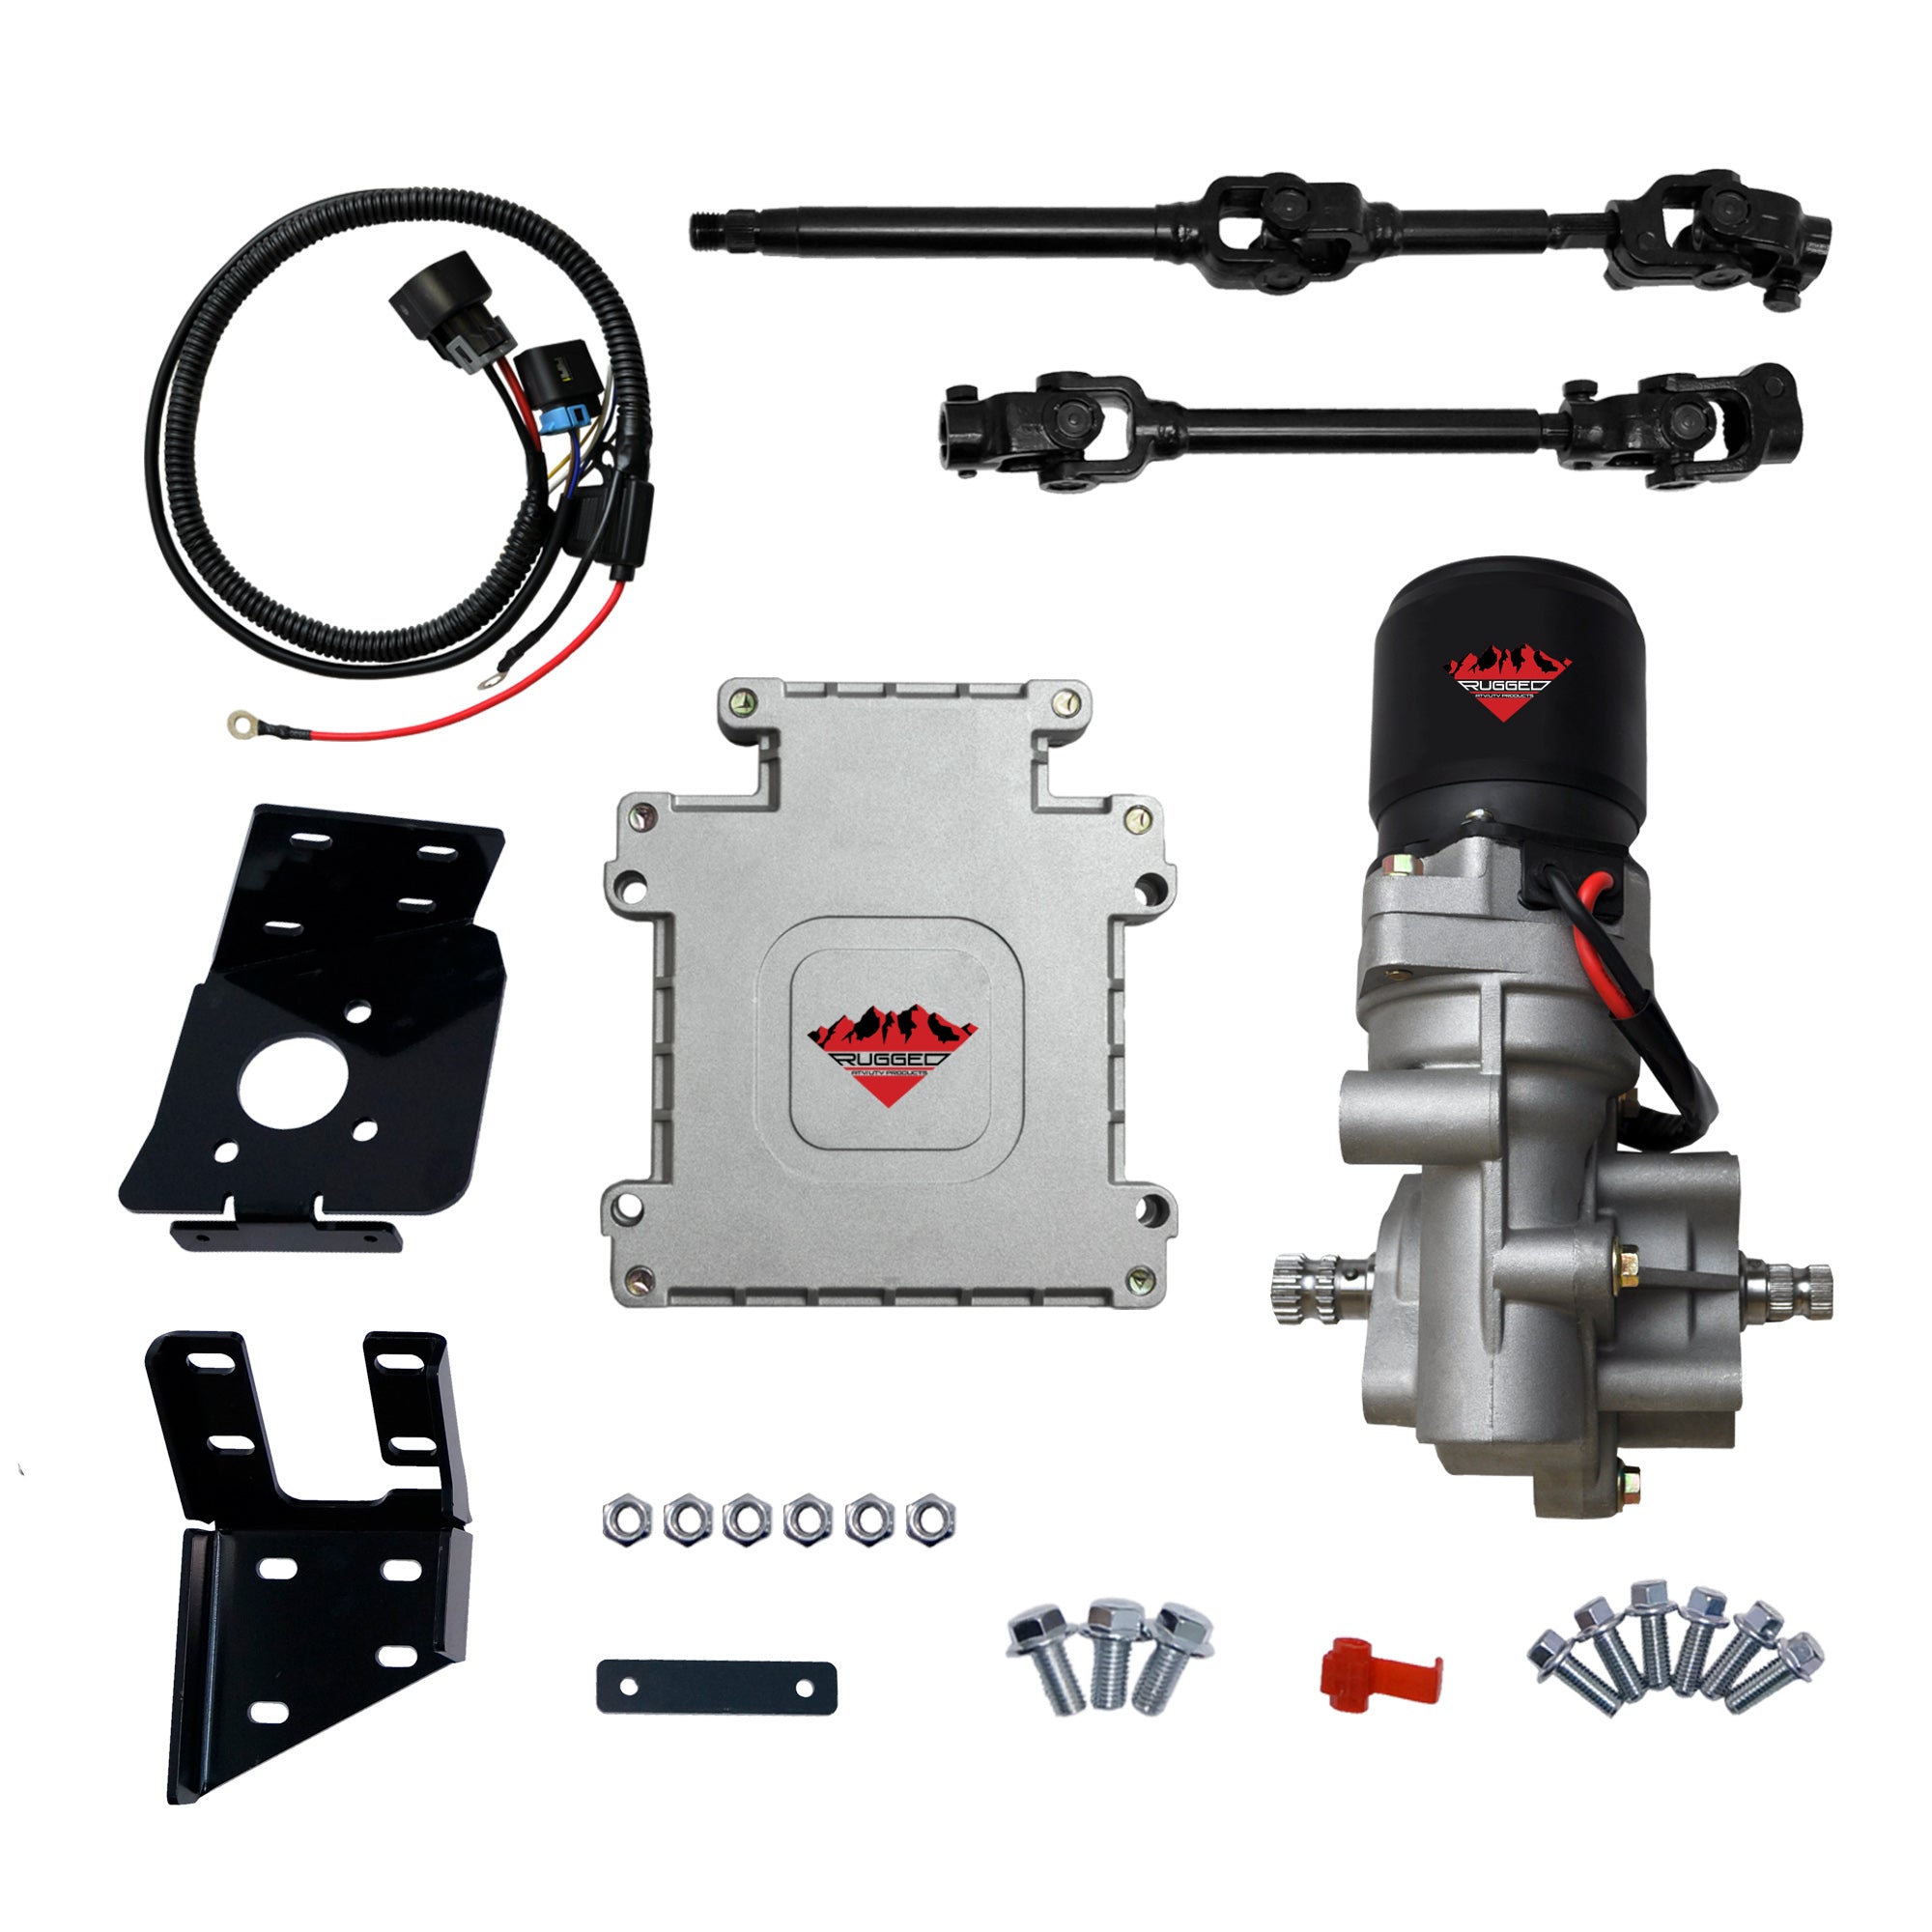 Electric Power Steering Kit for Polaris RZR Turbo 